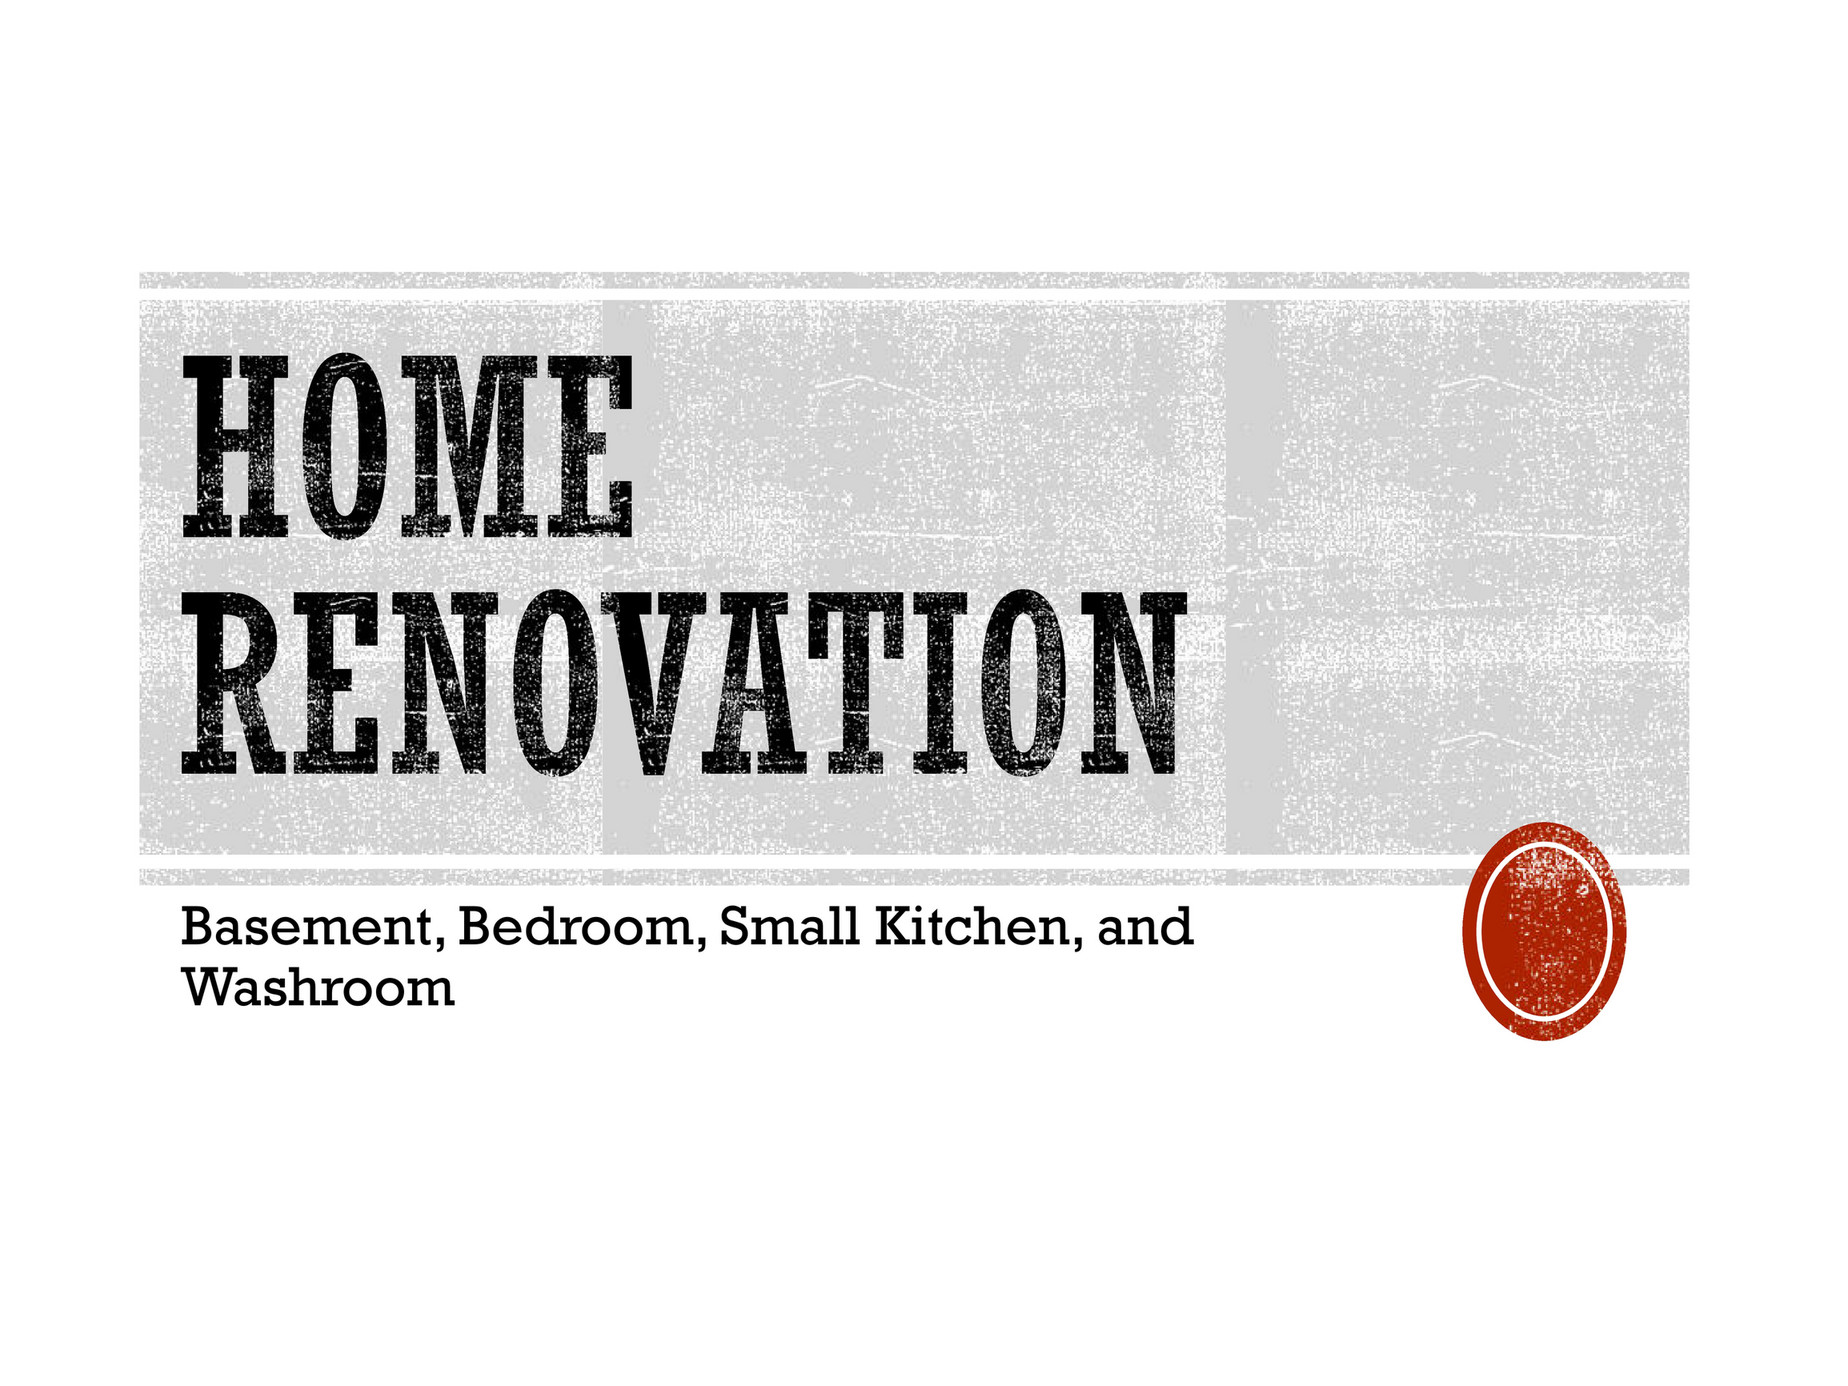 home-renovations-canada-home-renovation-basement-bedroom-small